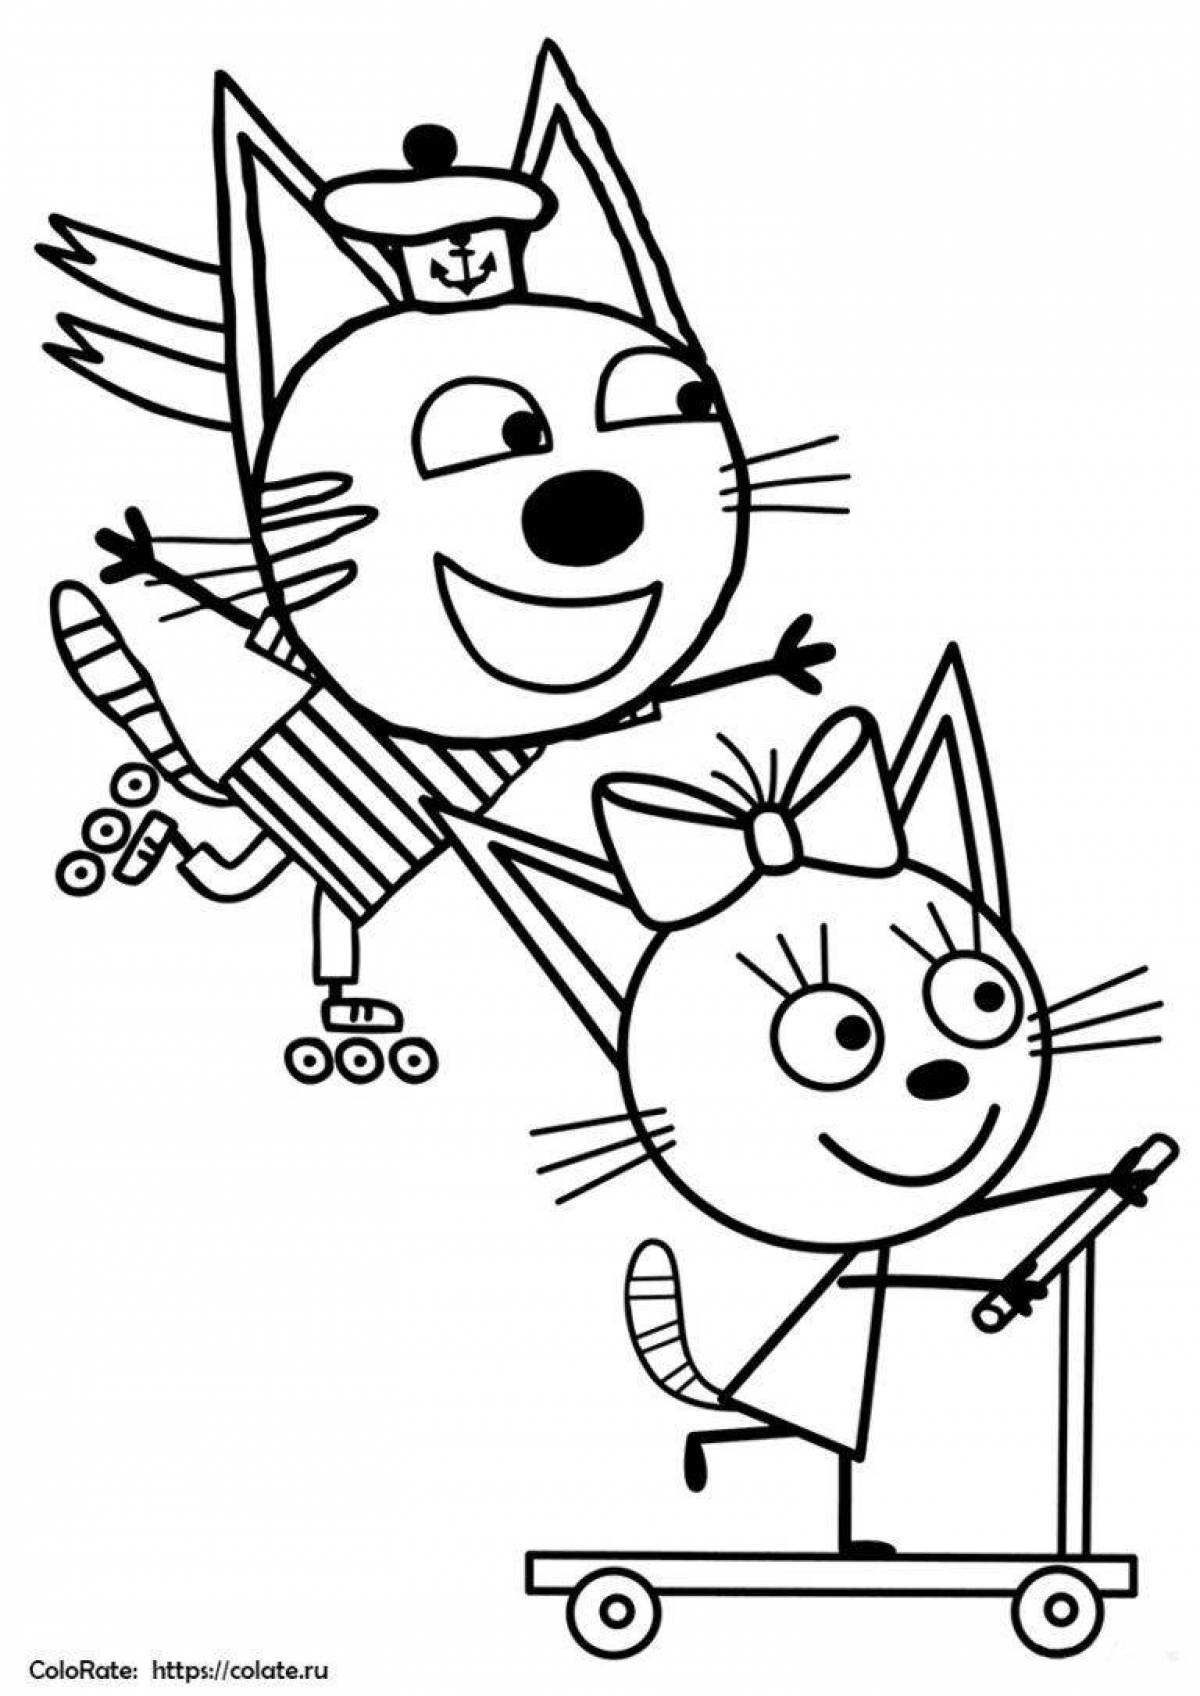 Fun 3 cats coloring page для девочек